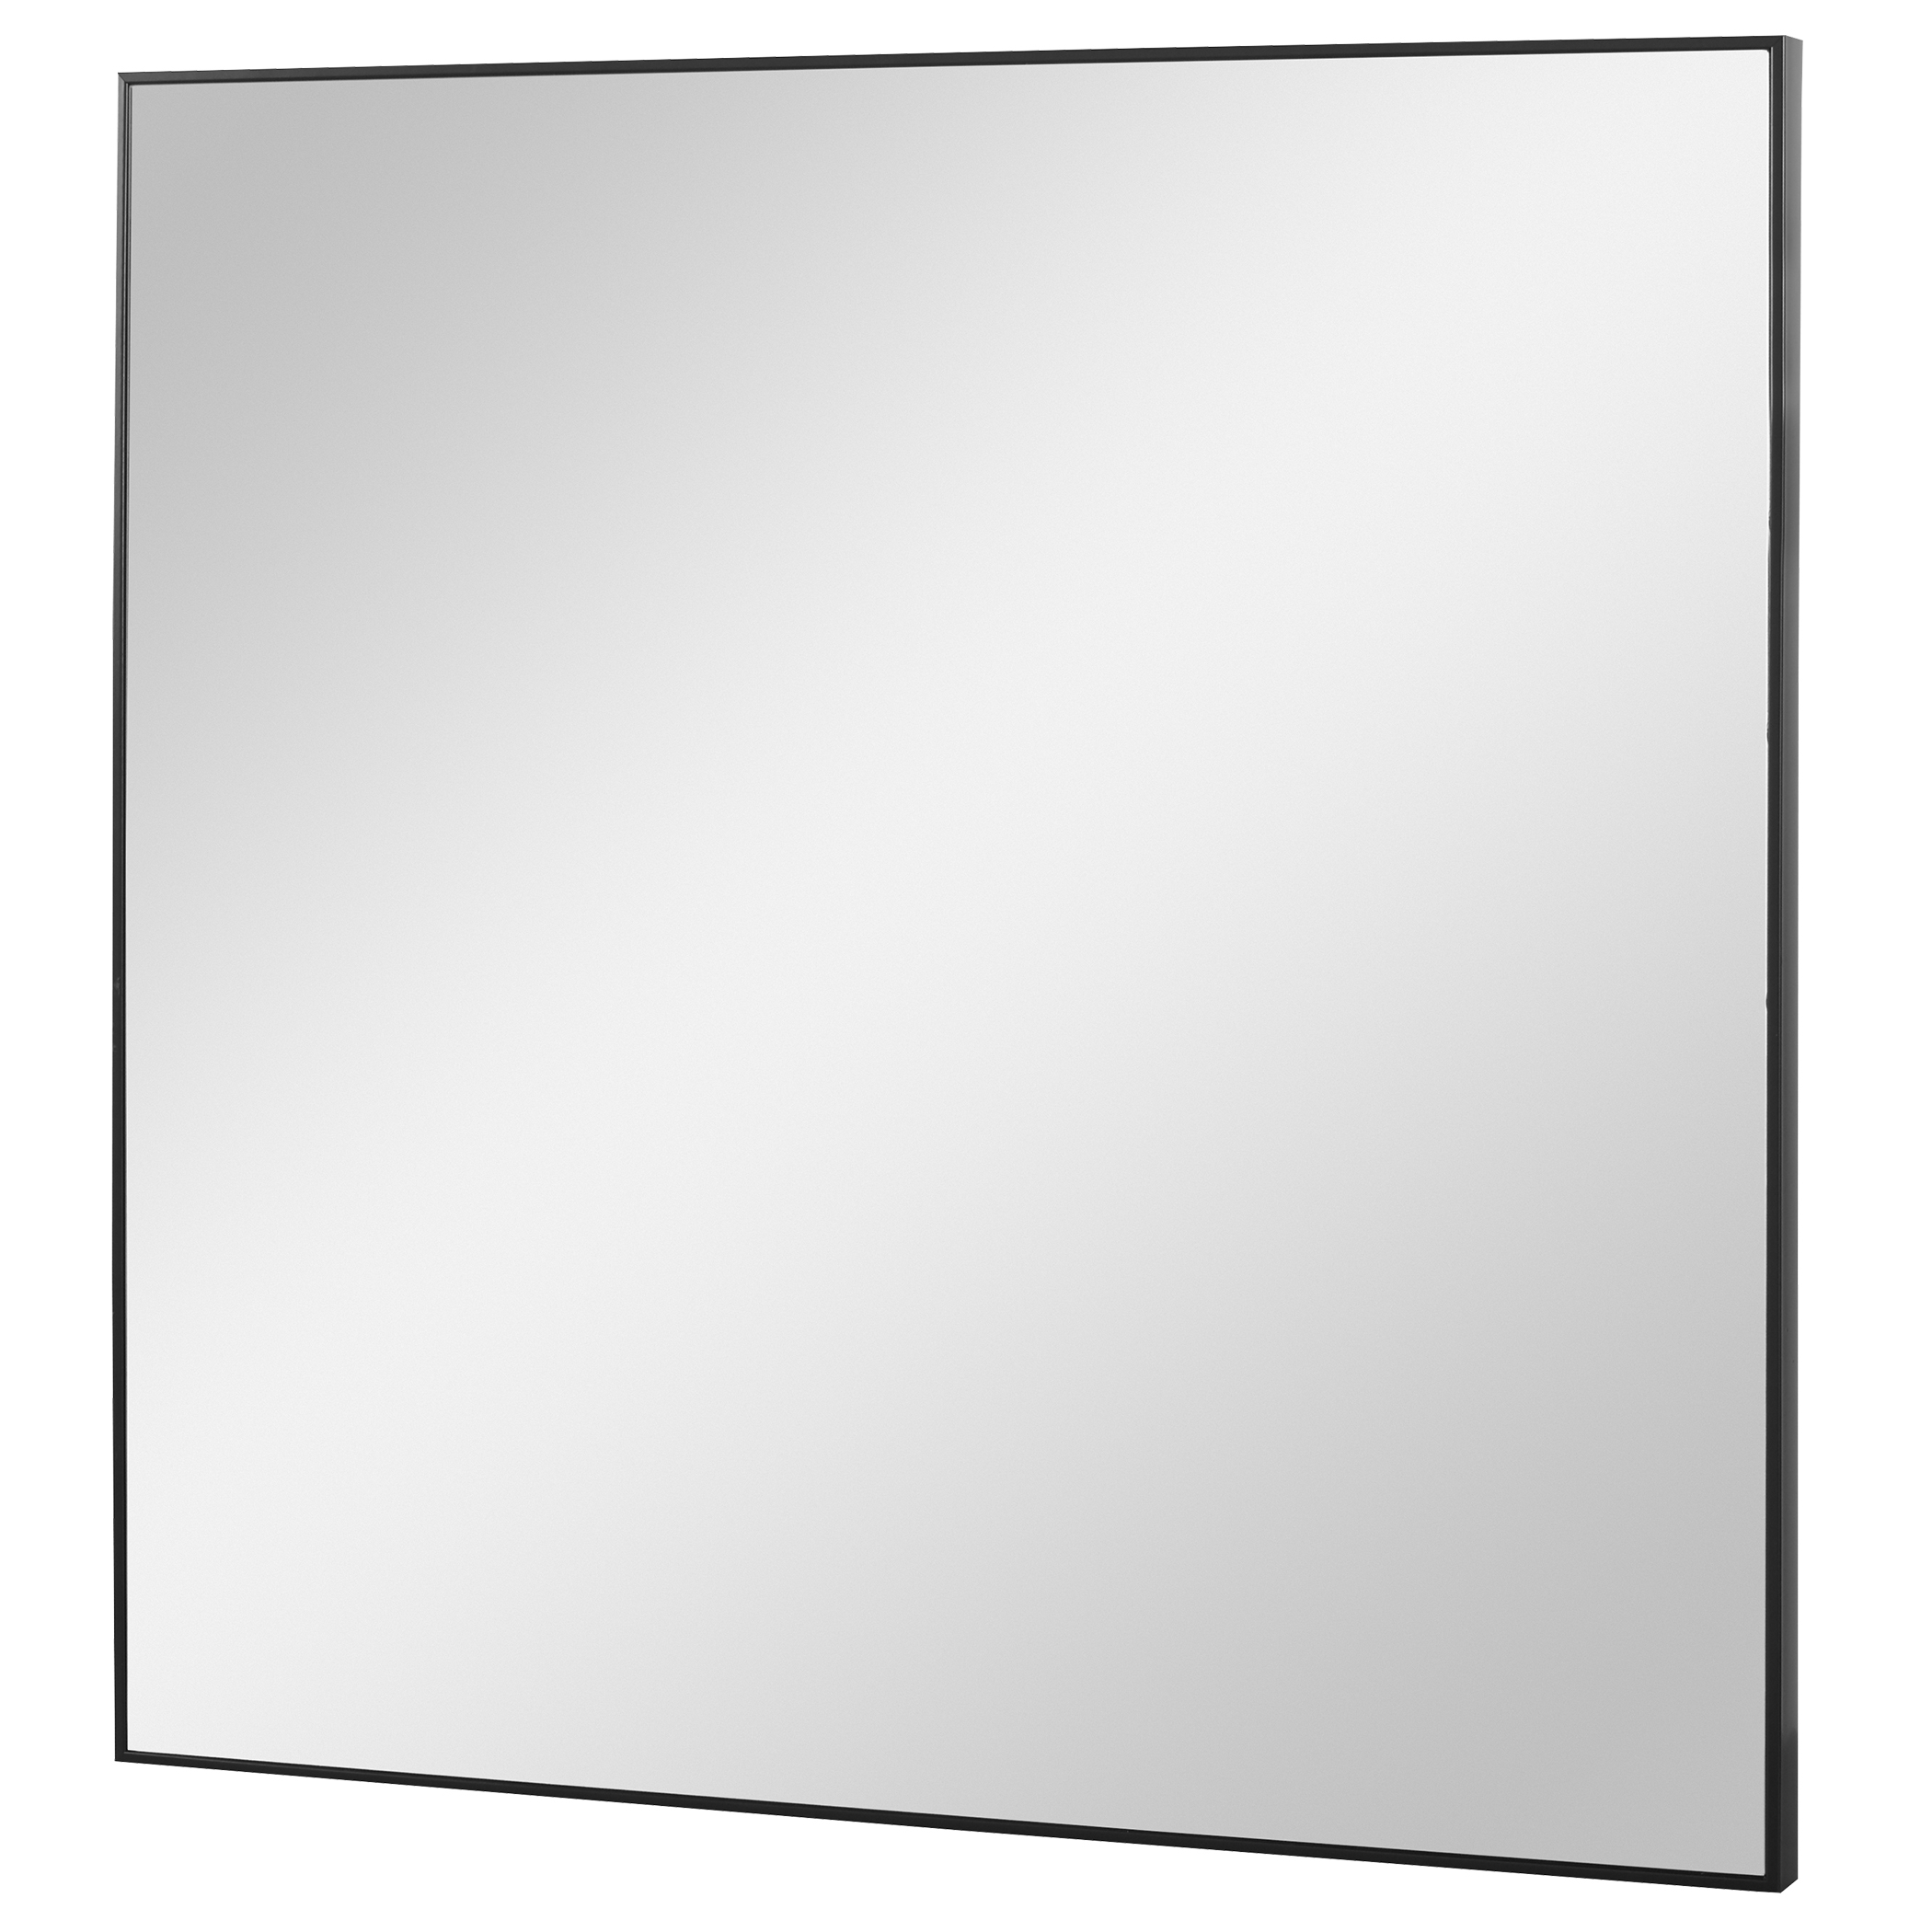 Alexo Black Square Mirror - Image 1